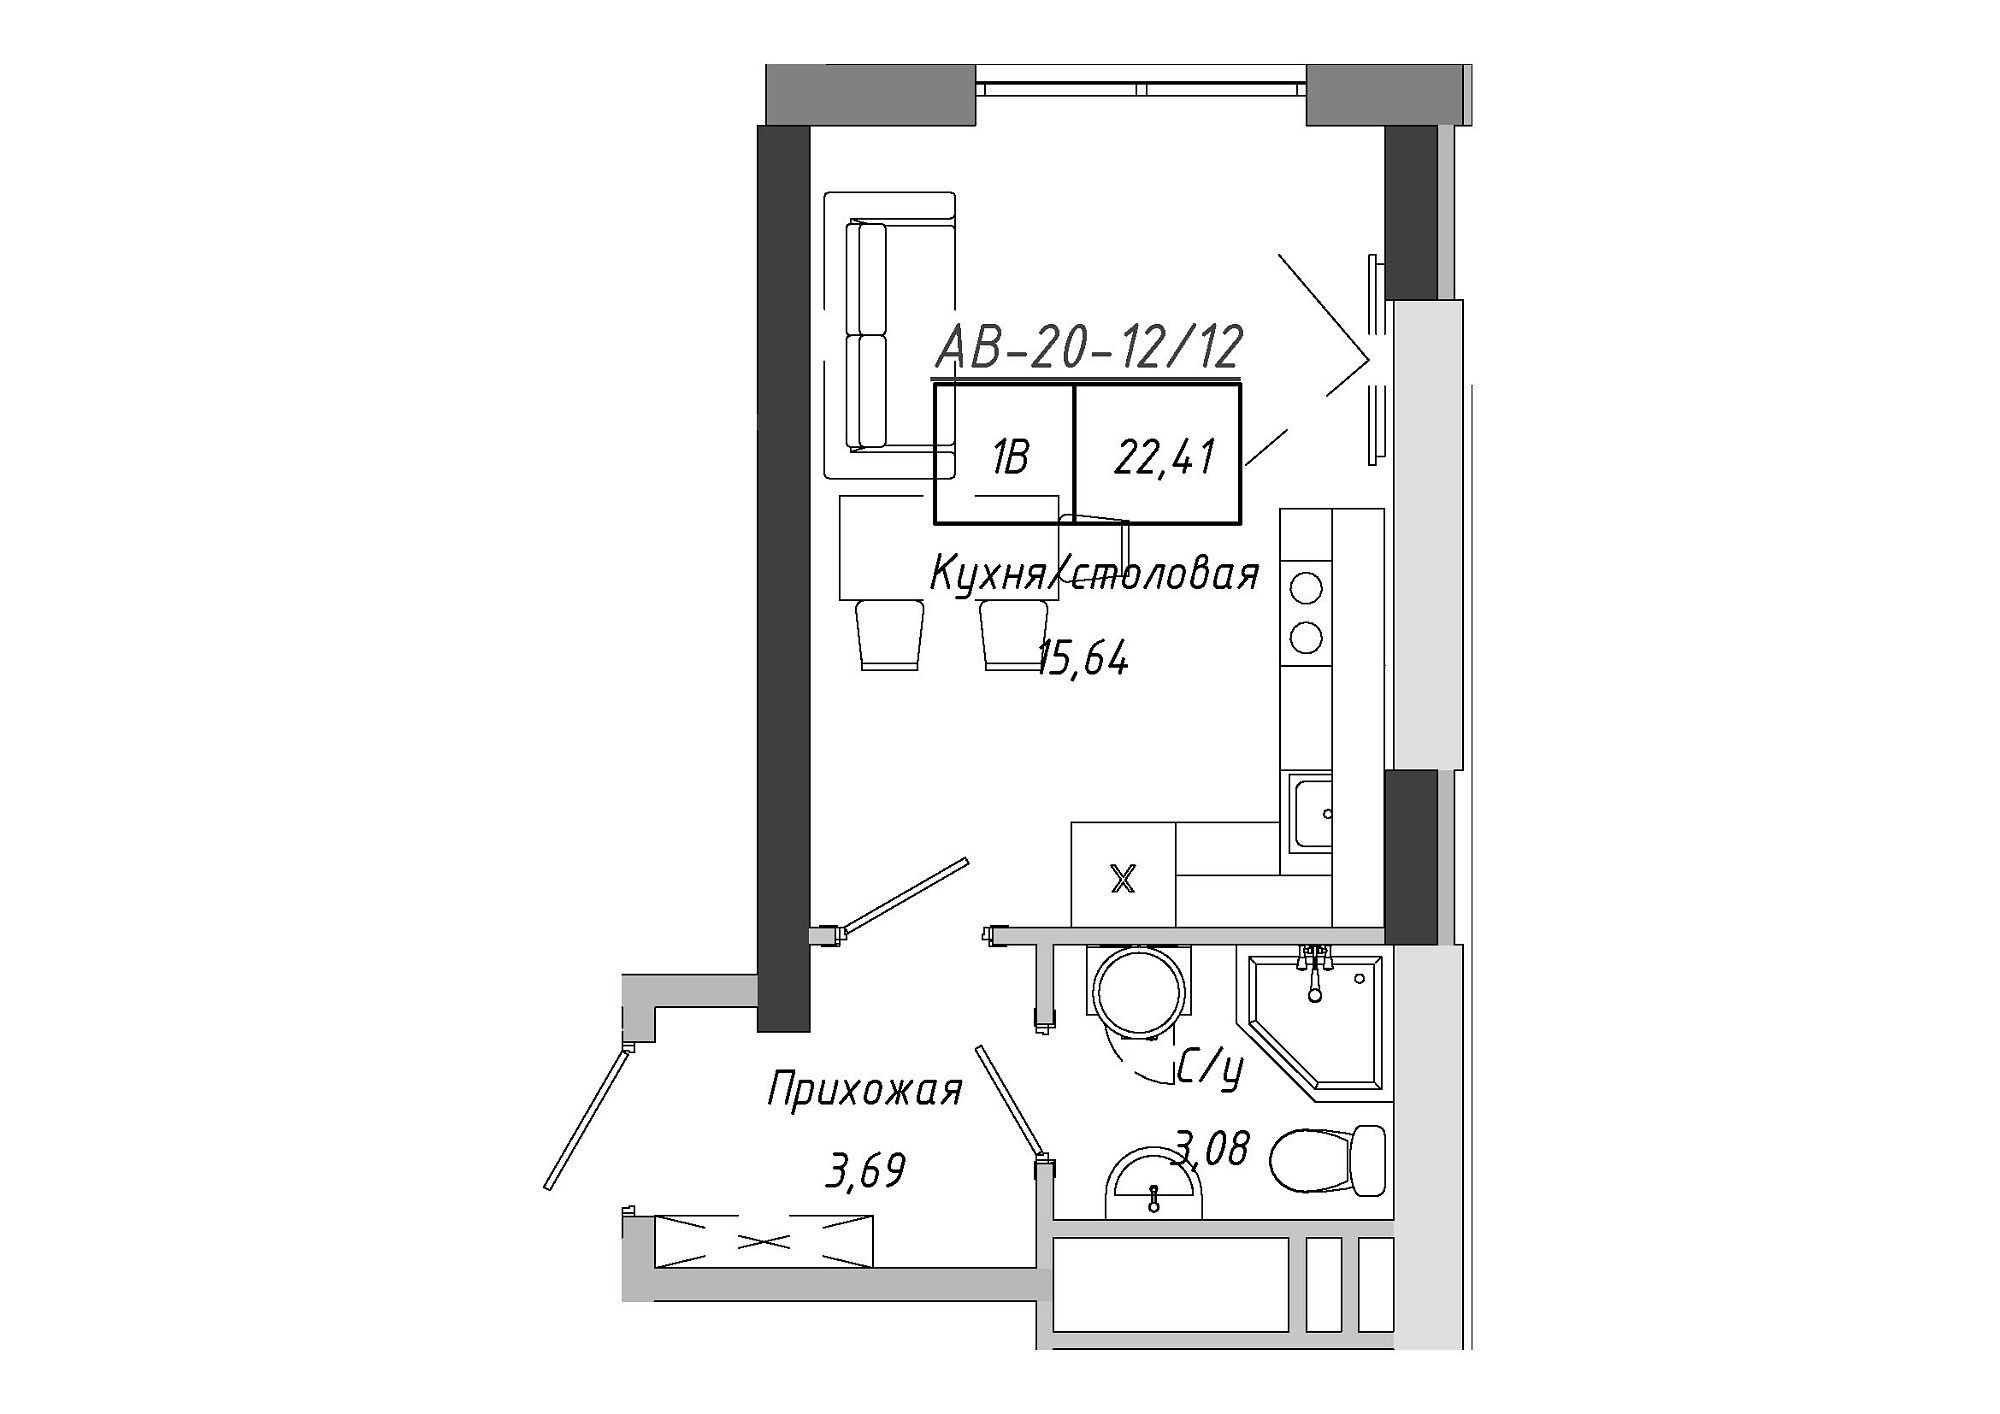 Planning Smart flats area 21.87m2, AB-20-12/00012.